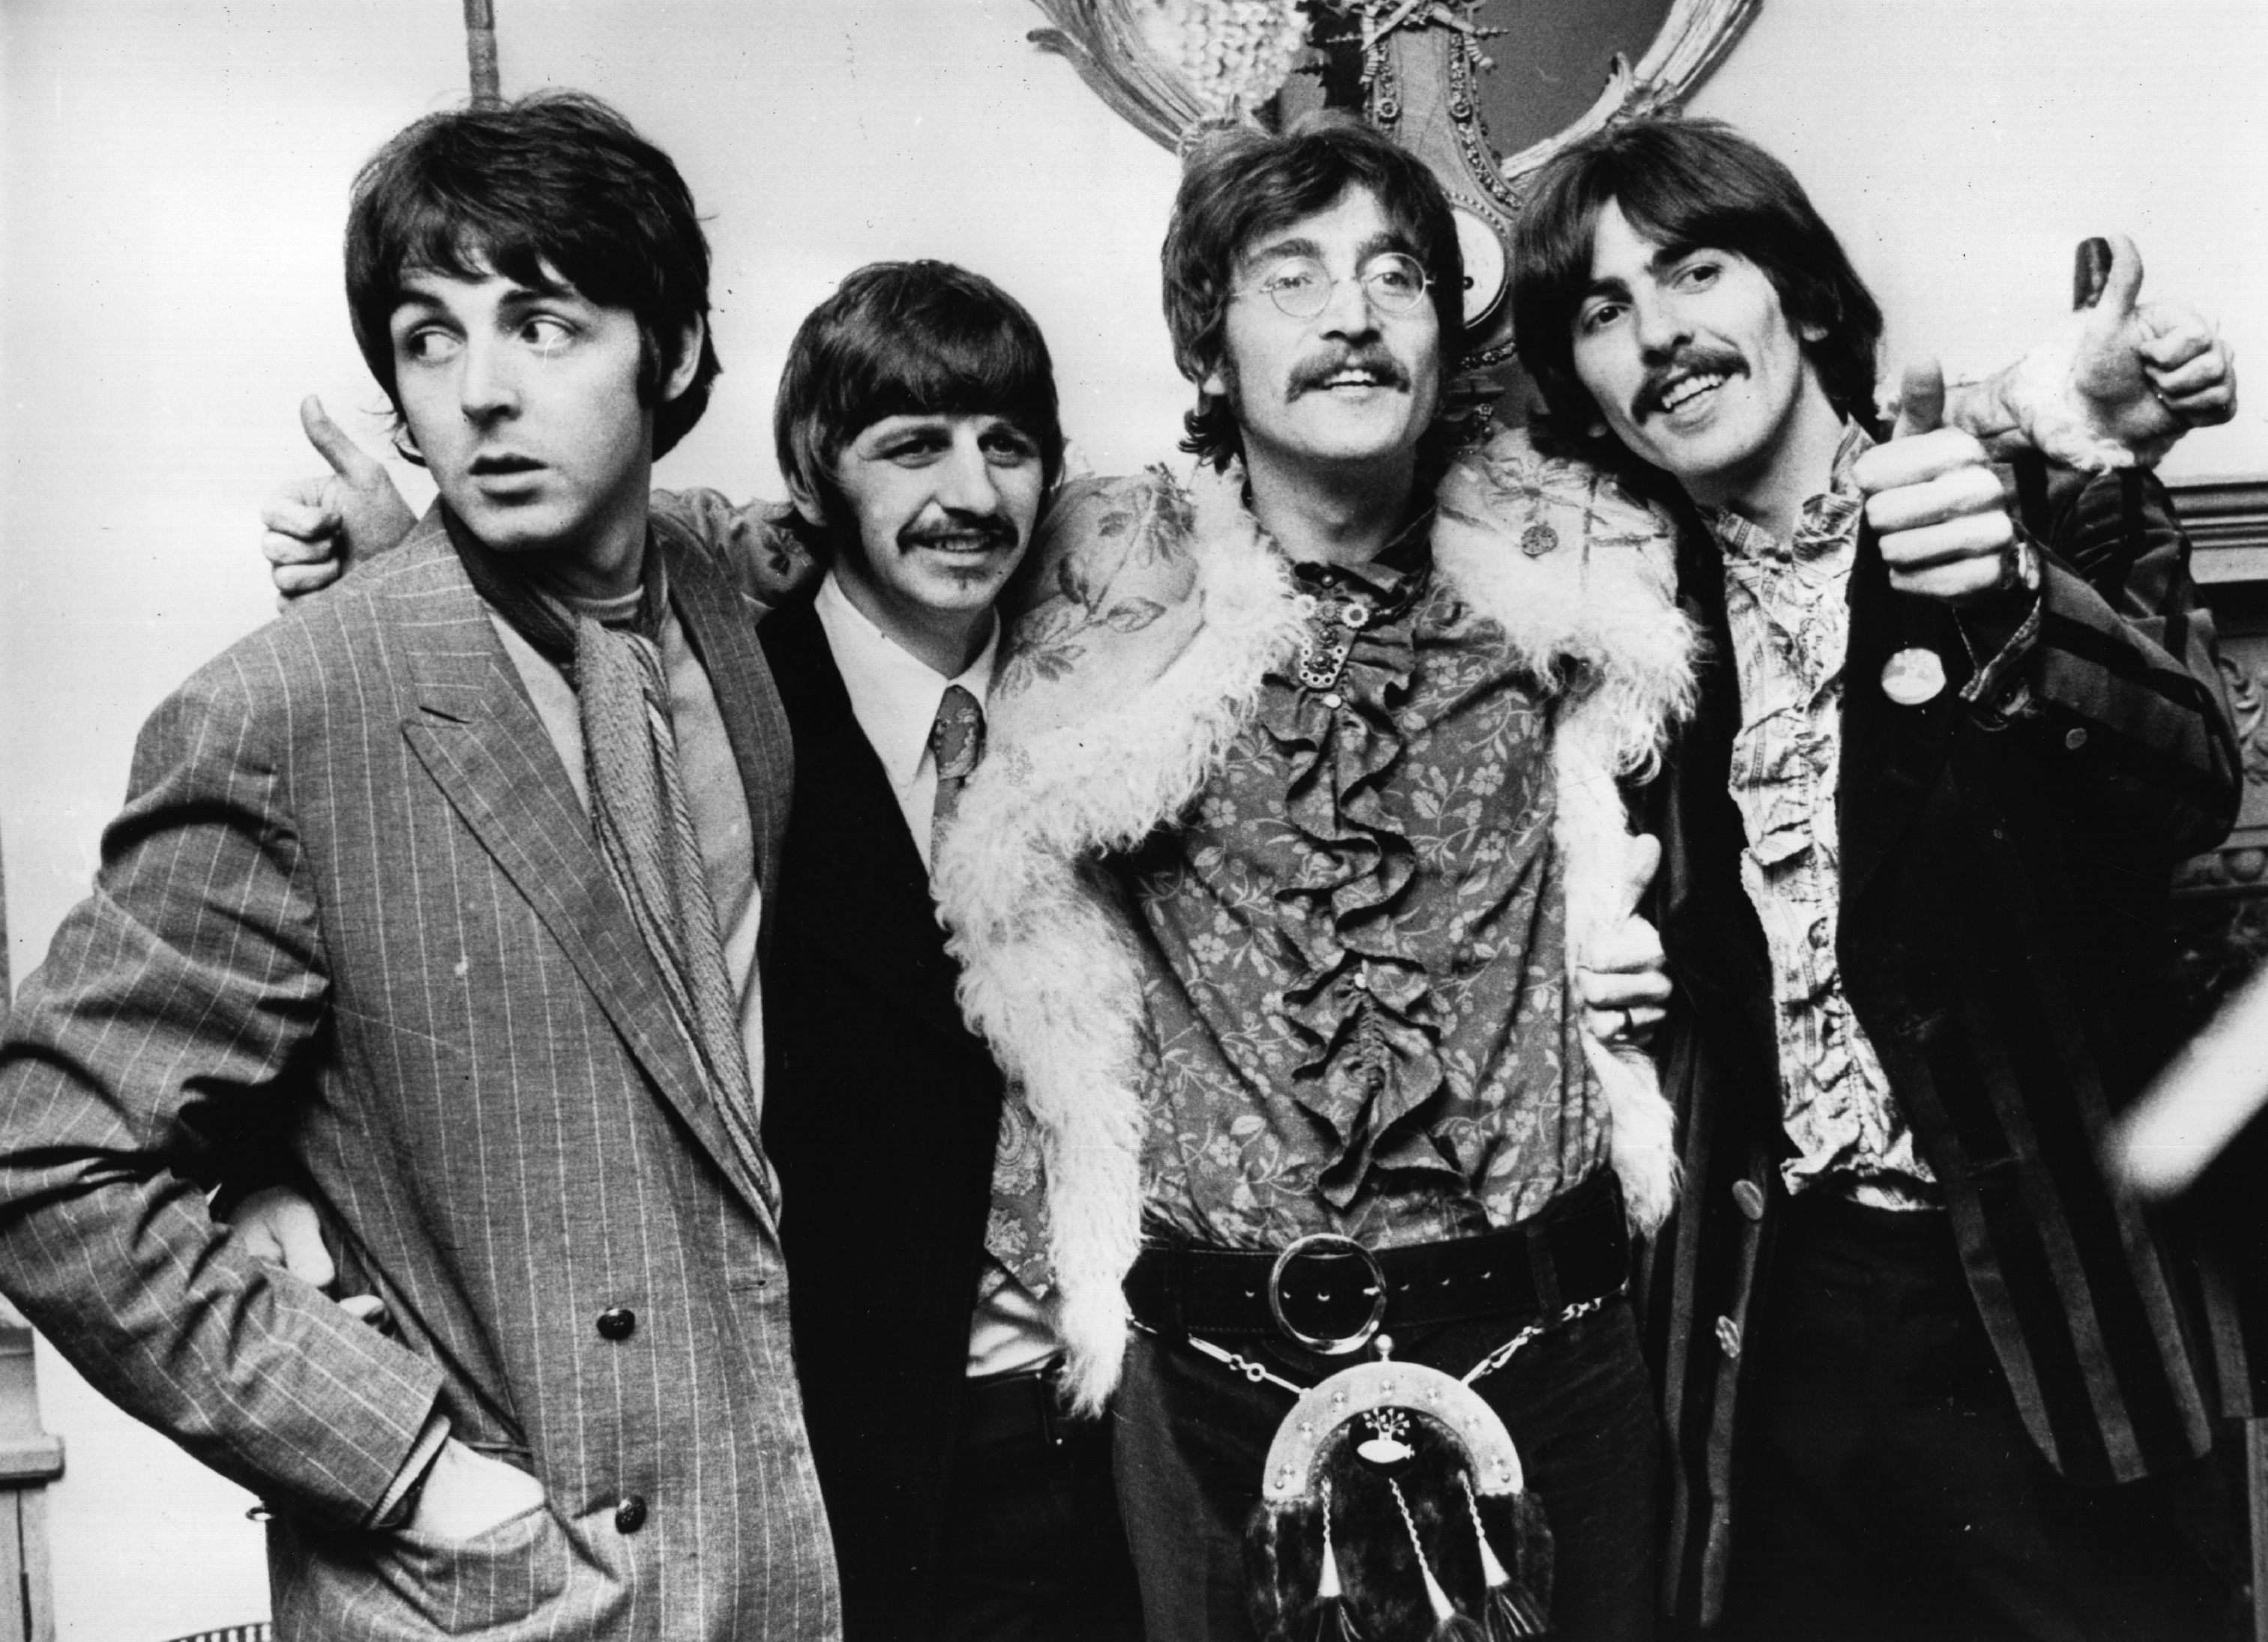 The Beatles’ Paul McCartney, Ringo Starr, John Lennon, and George Harrison standing in a row